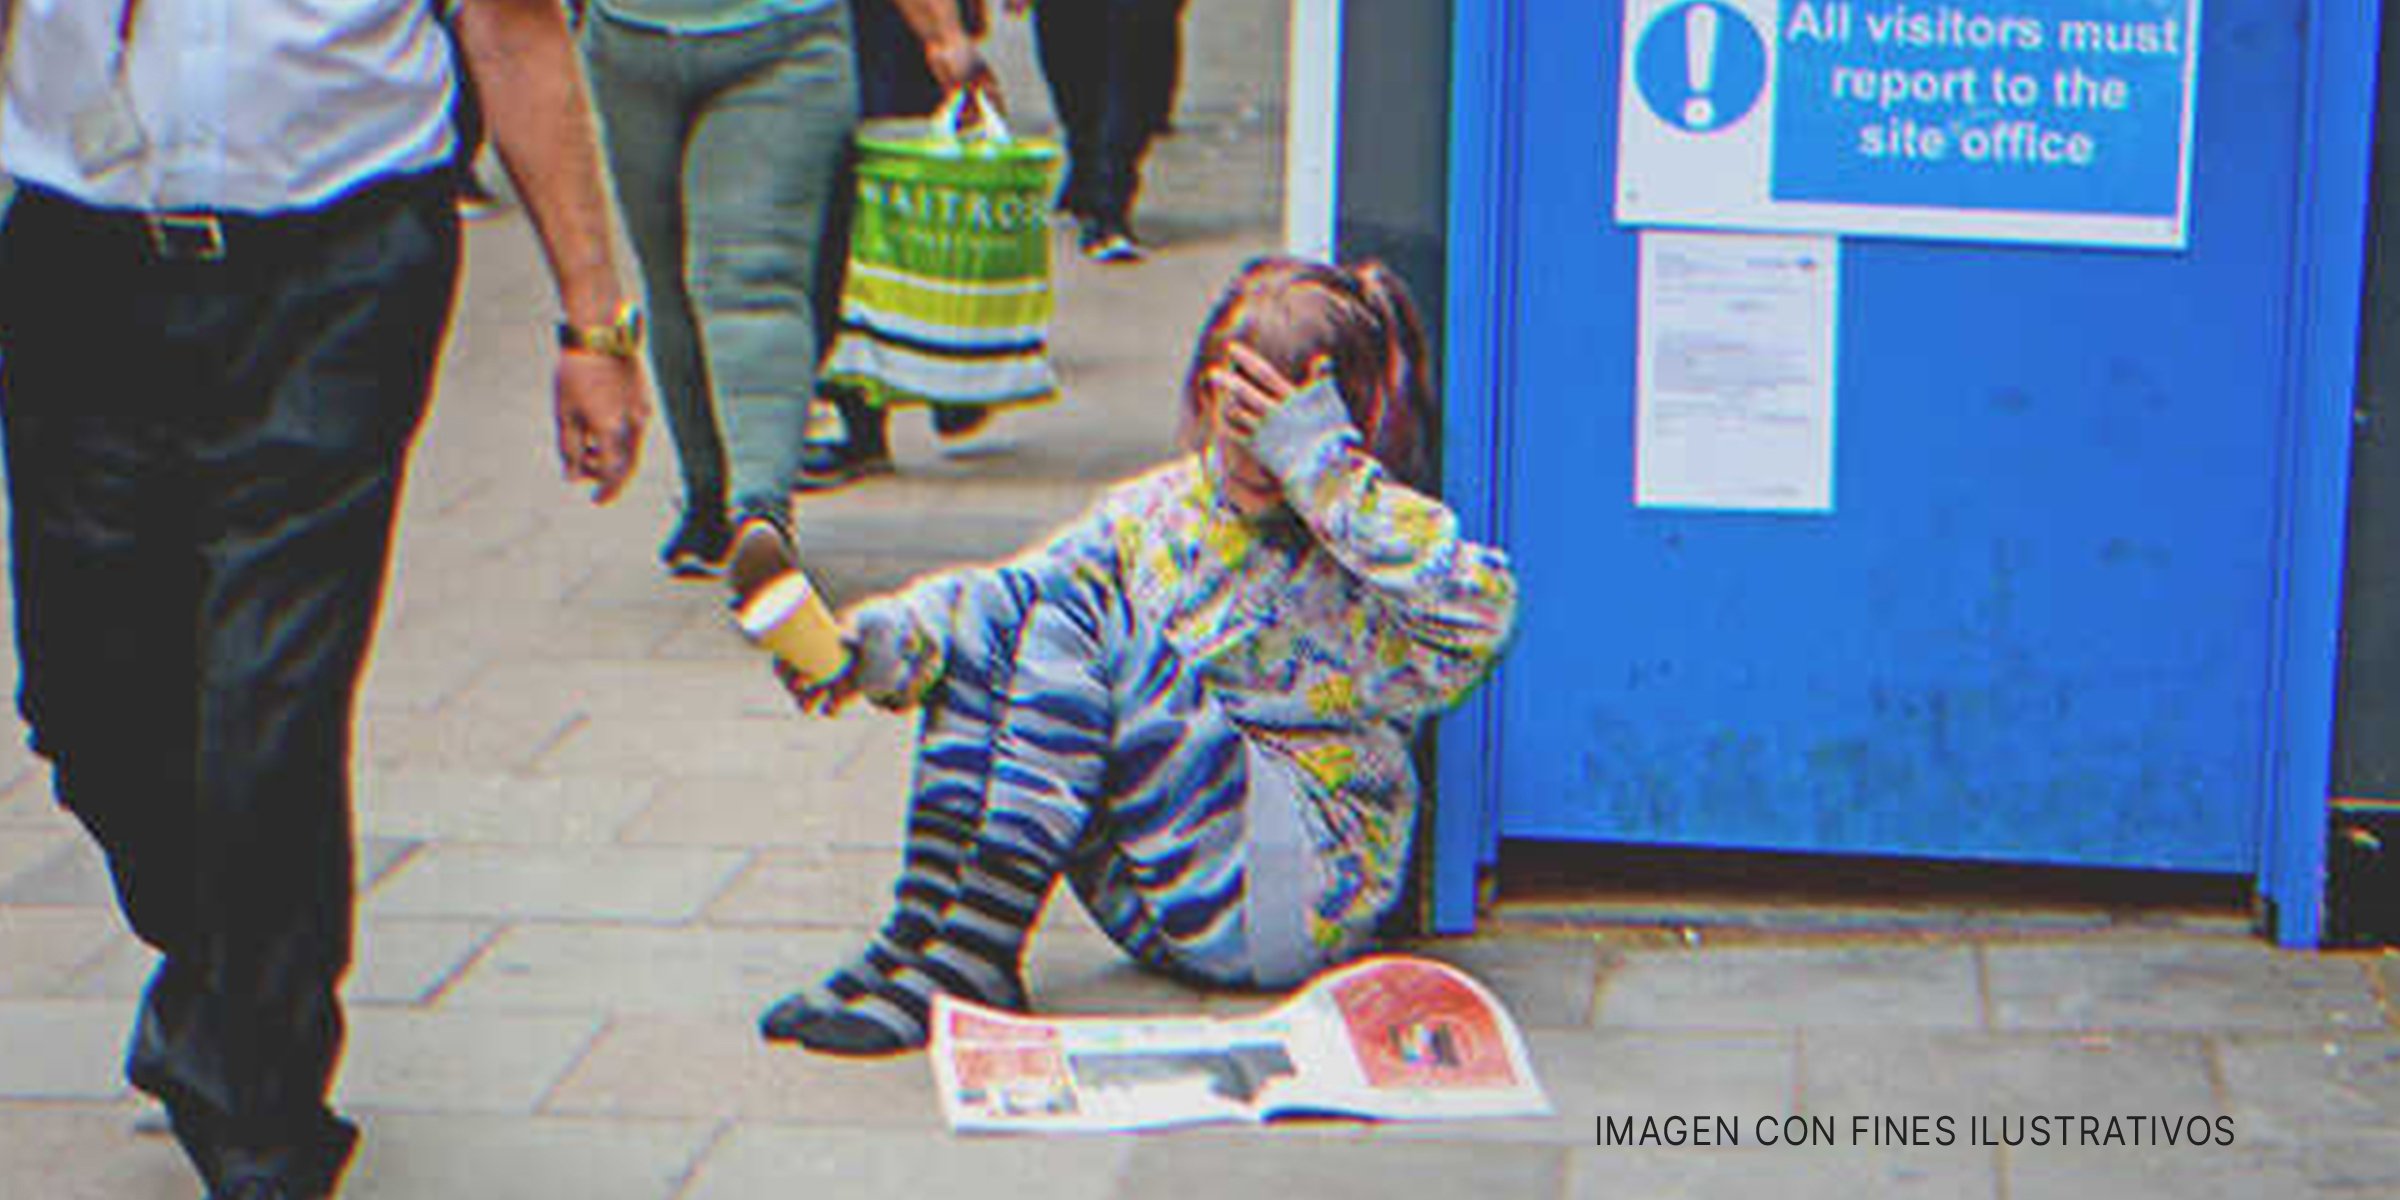 Joven mendigando en la calle | Foto: Shutterstock